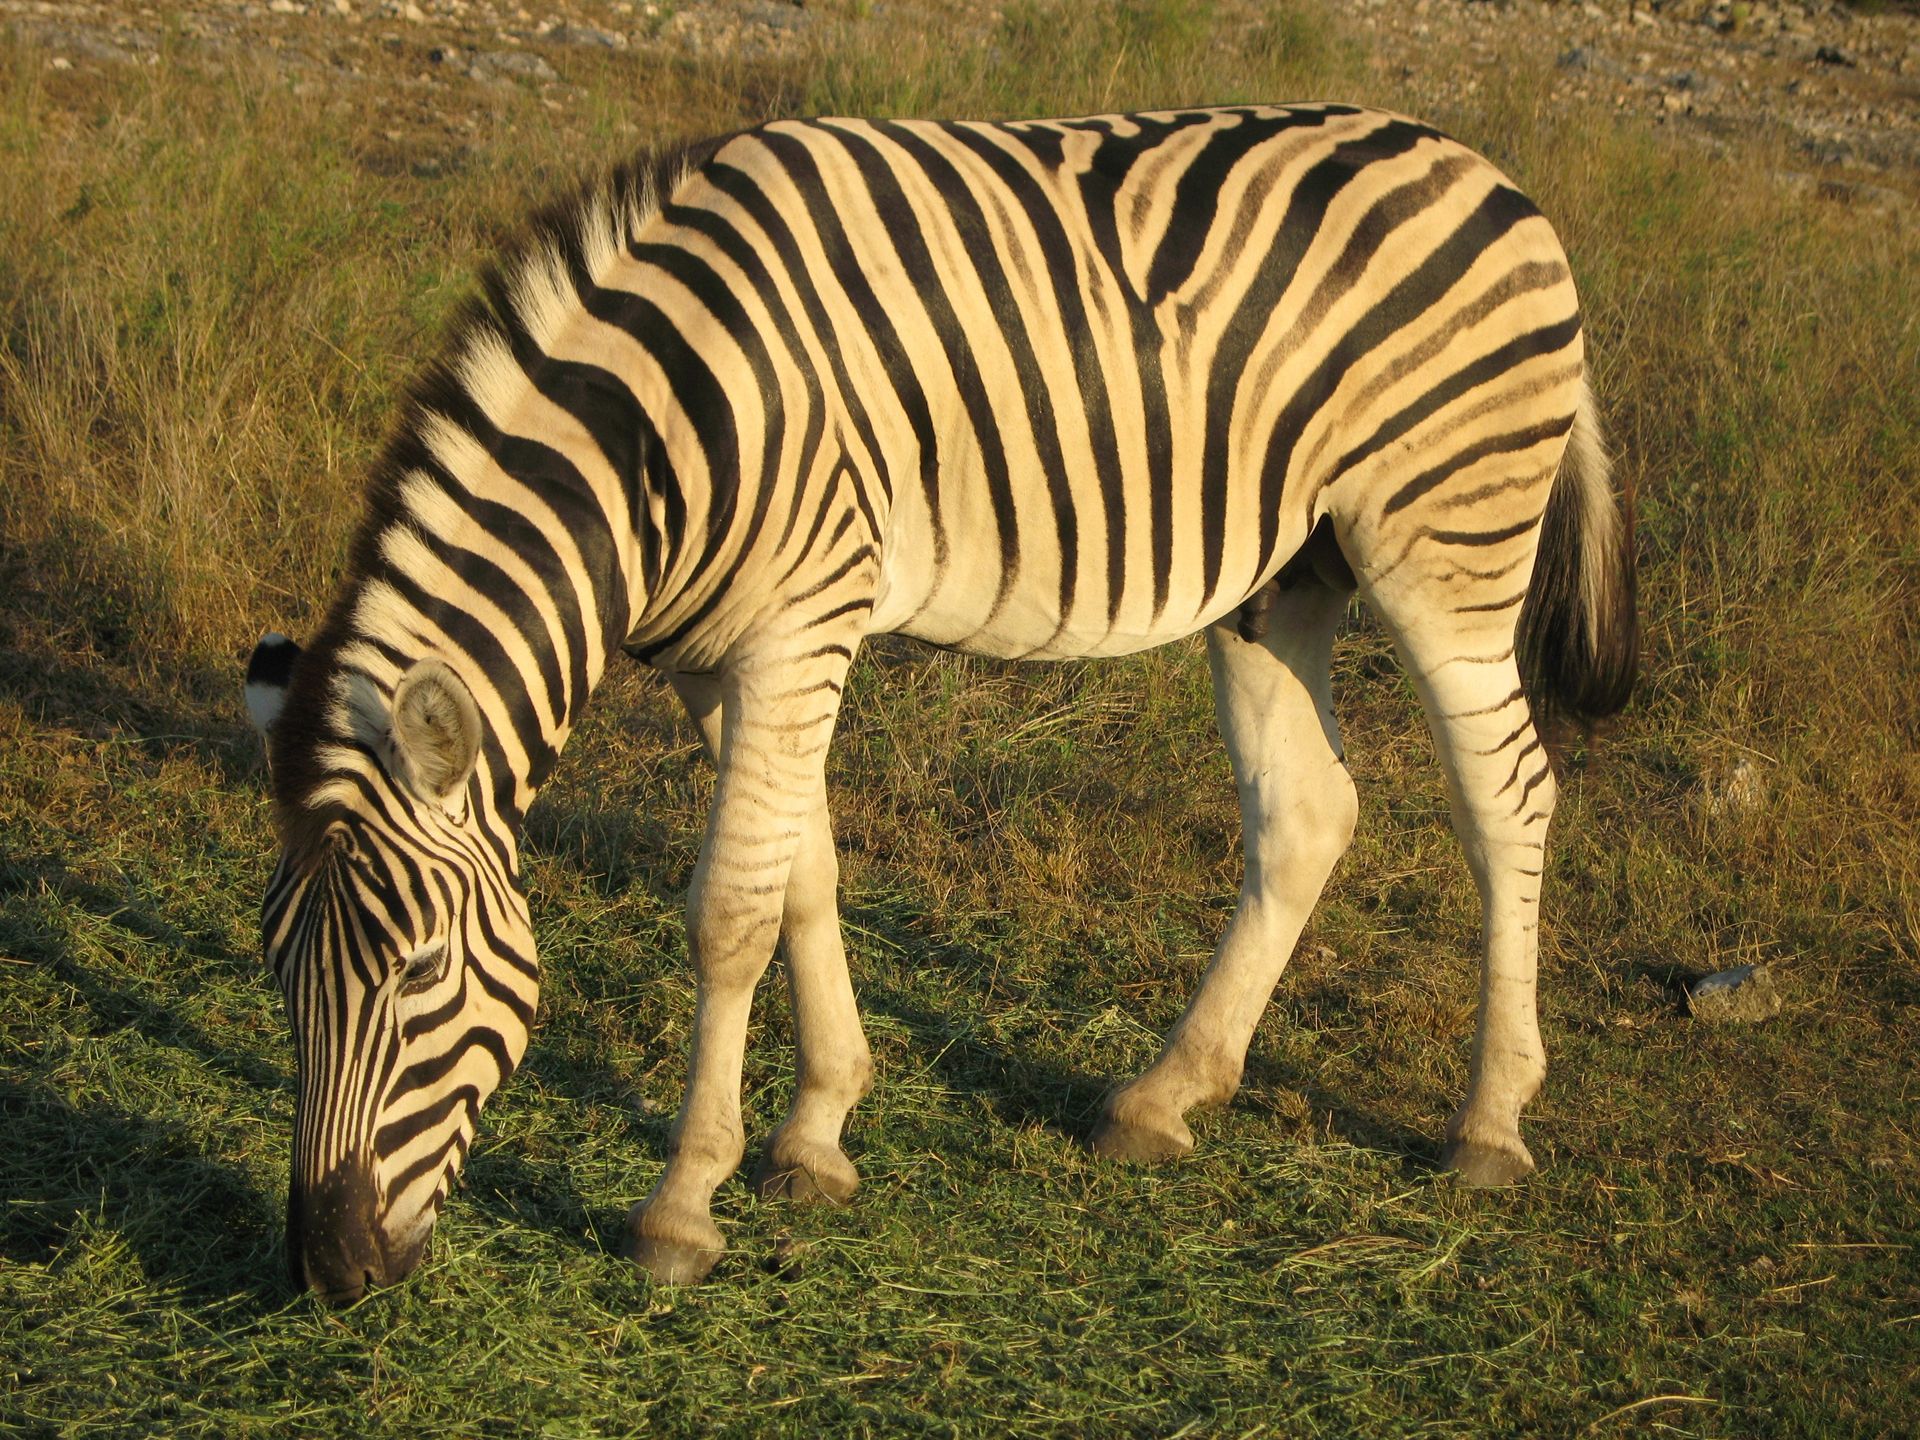 An image of a zebra grazing in a field.